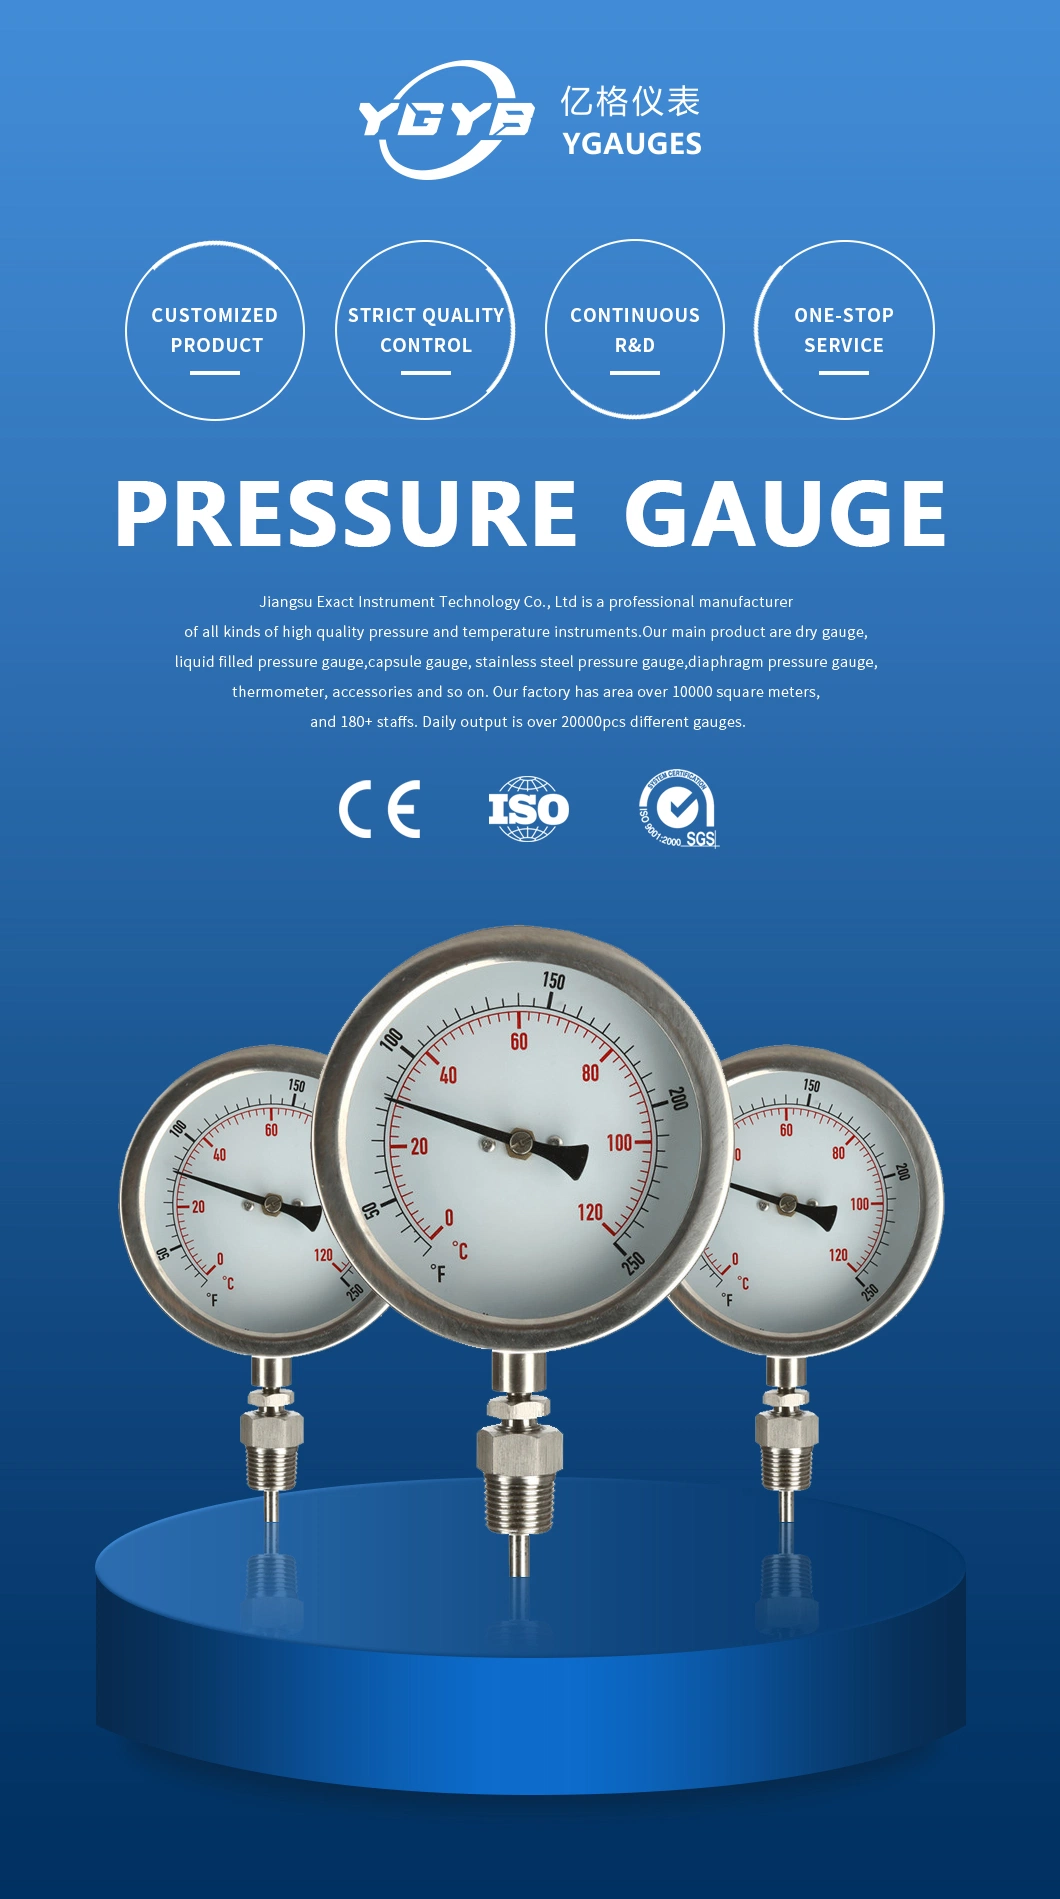 Industrial HVAC Bimetal Thermometer Temperature Gauge